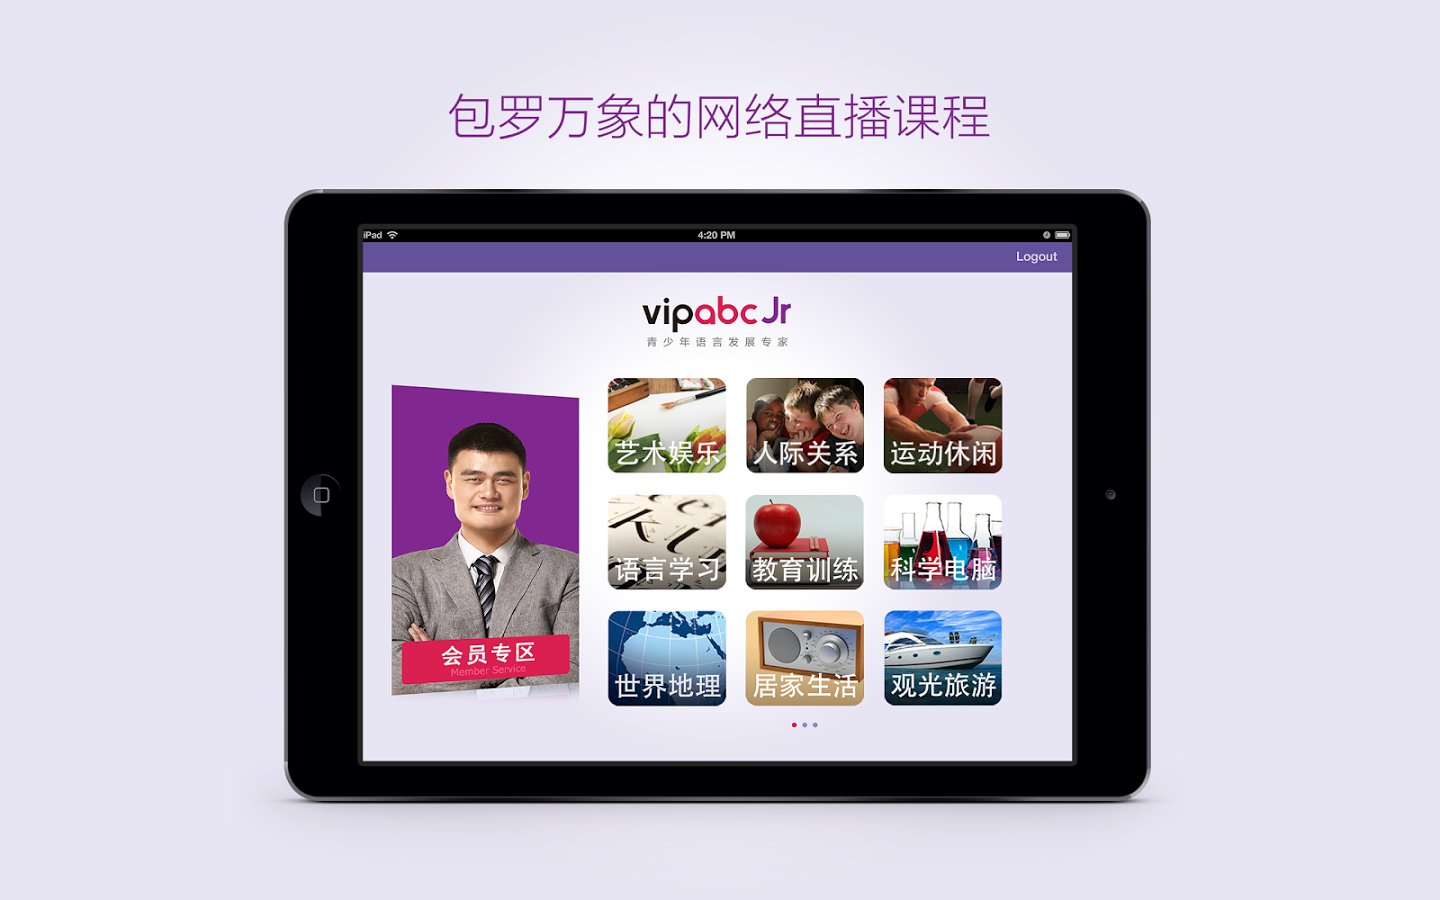 VIPABC(英语真人说) v1.1.10 安卓版3